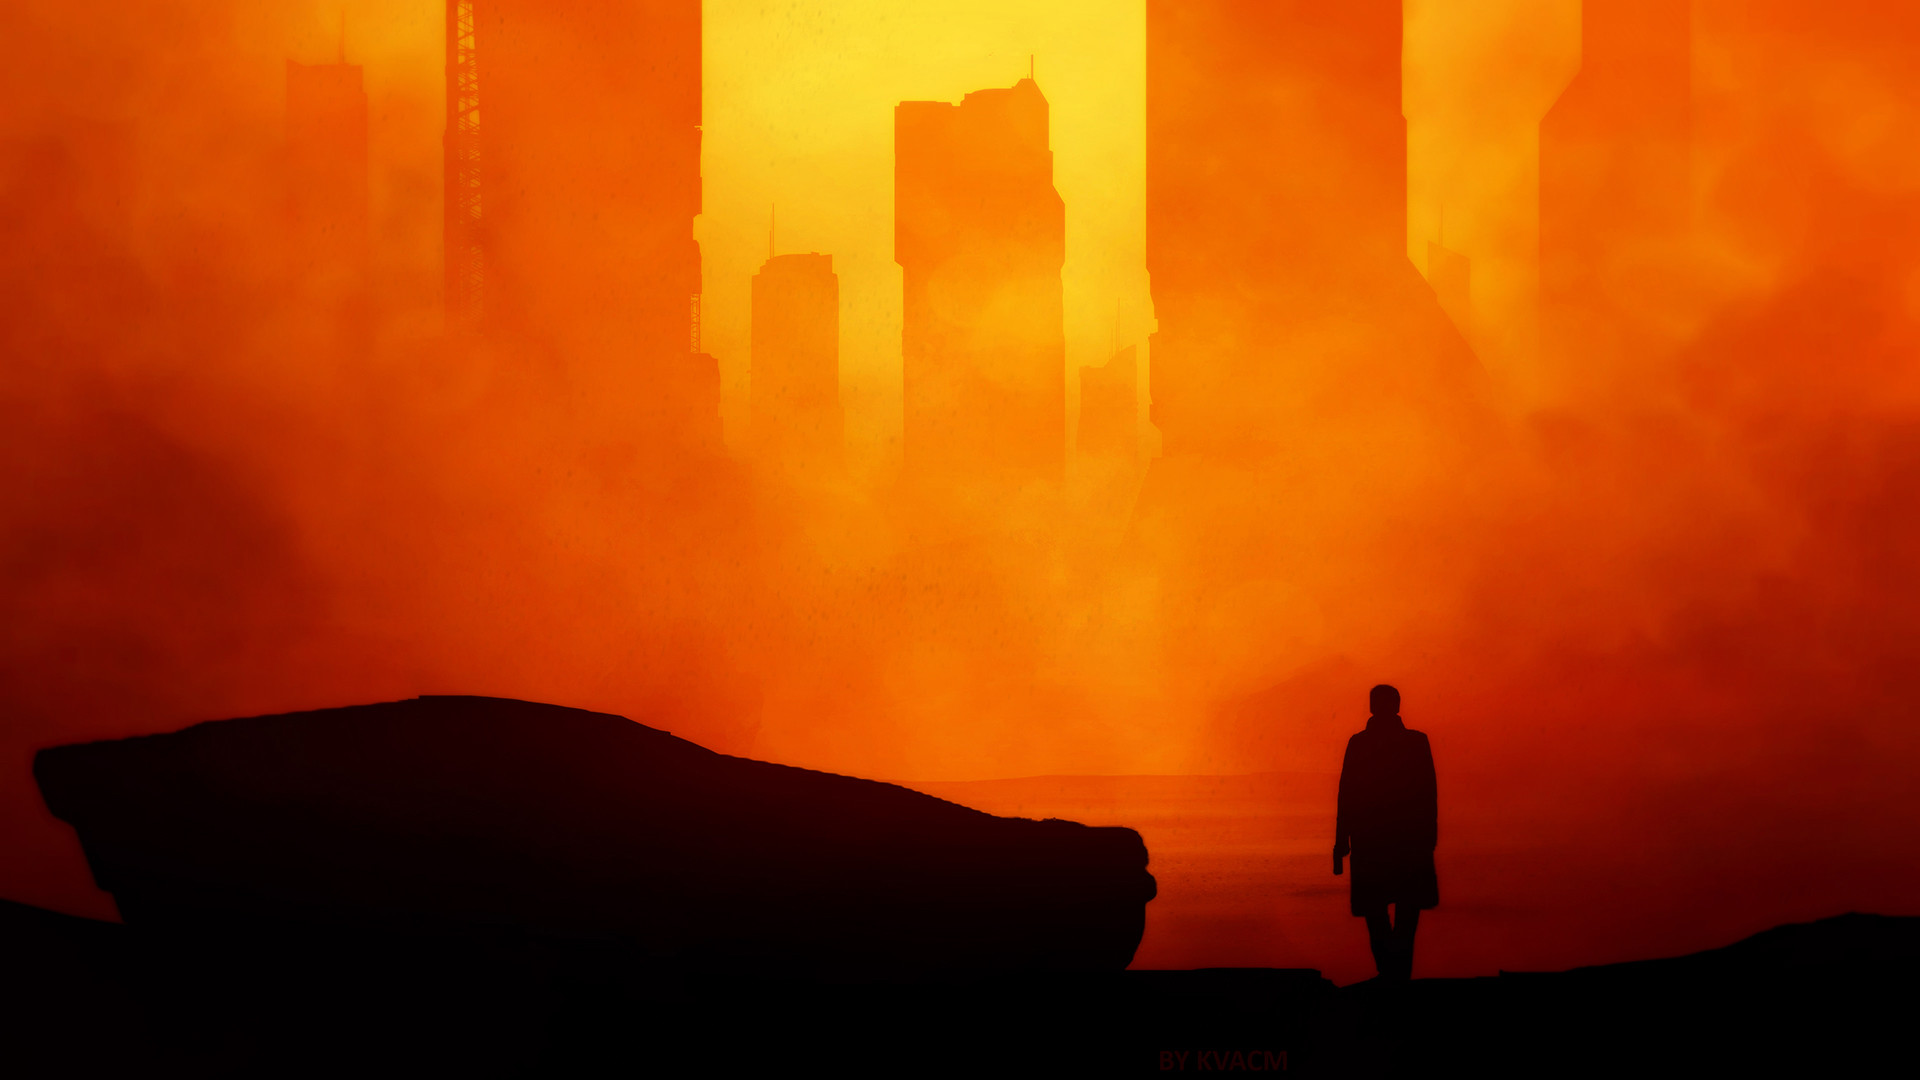 blade runner 2049, movie, building, city, futuristic, orange (color), silhouette